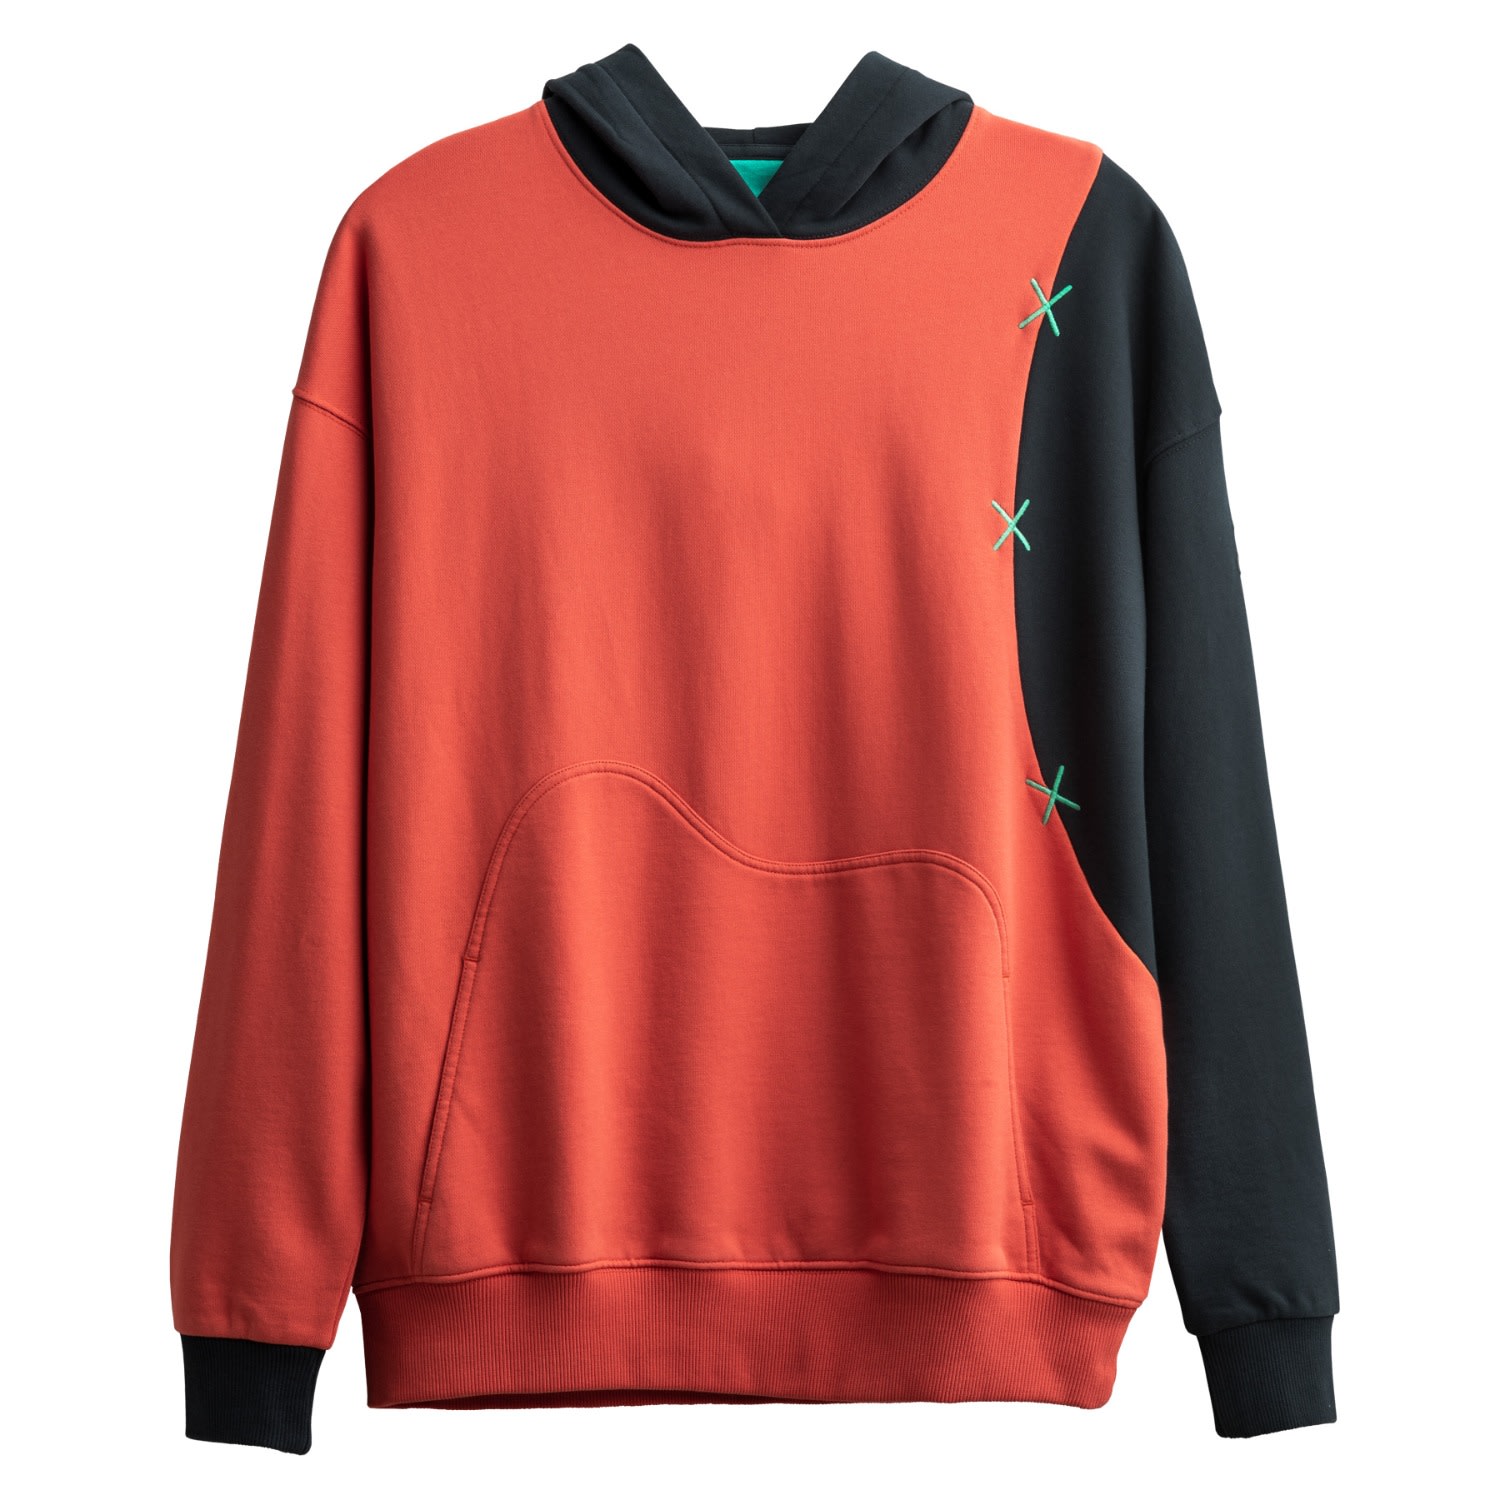 Men's Red Unisex Design Hoodie Sweatshirt - Oileka - Coral Extra Small KAFT